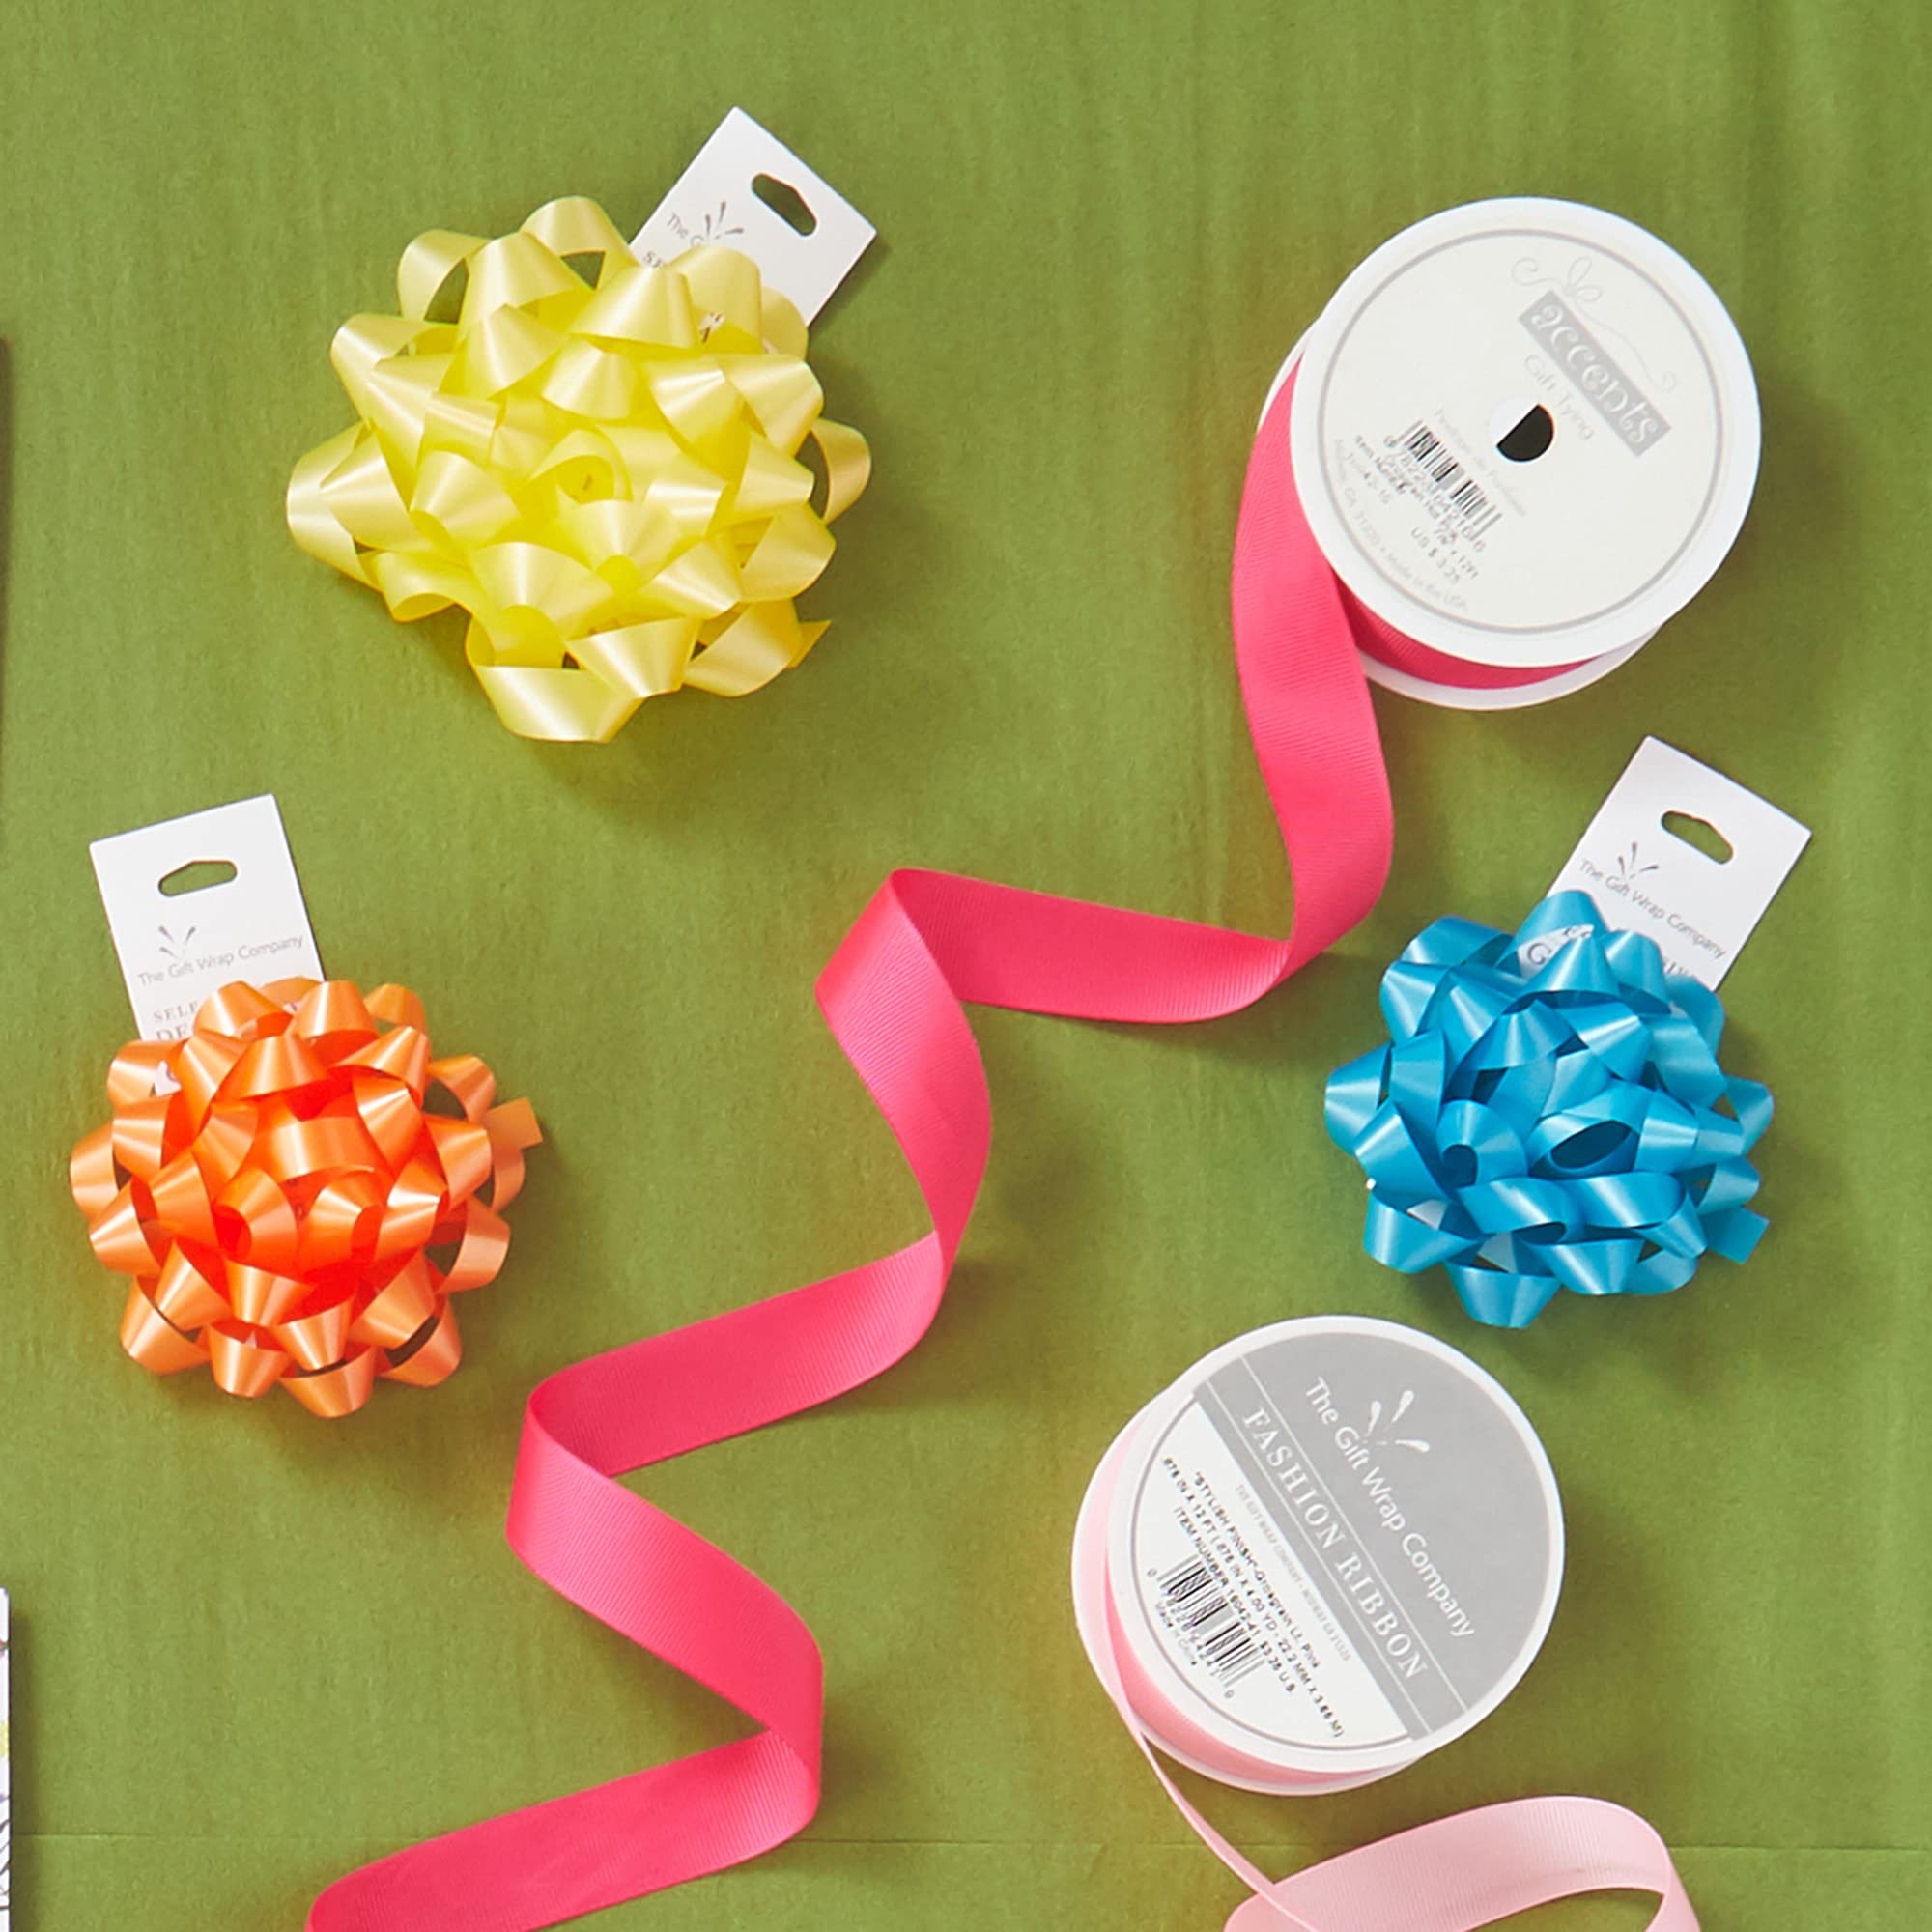 The Gift Wrap Company Decorative Confetti Gift Bows, Medium, Aqua, pack of 12